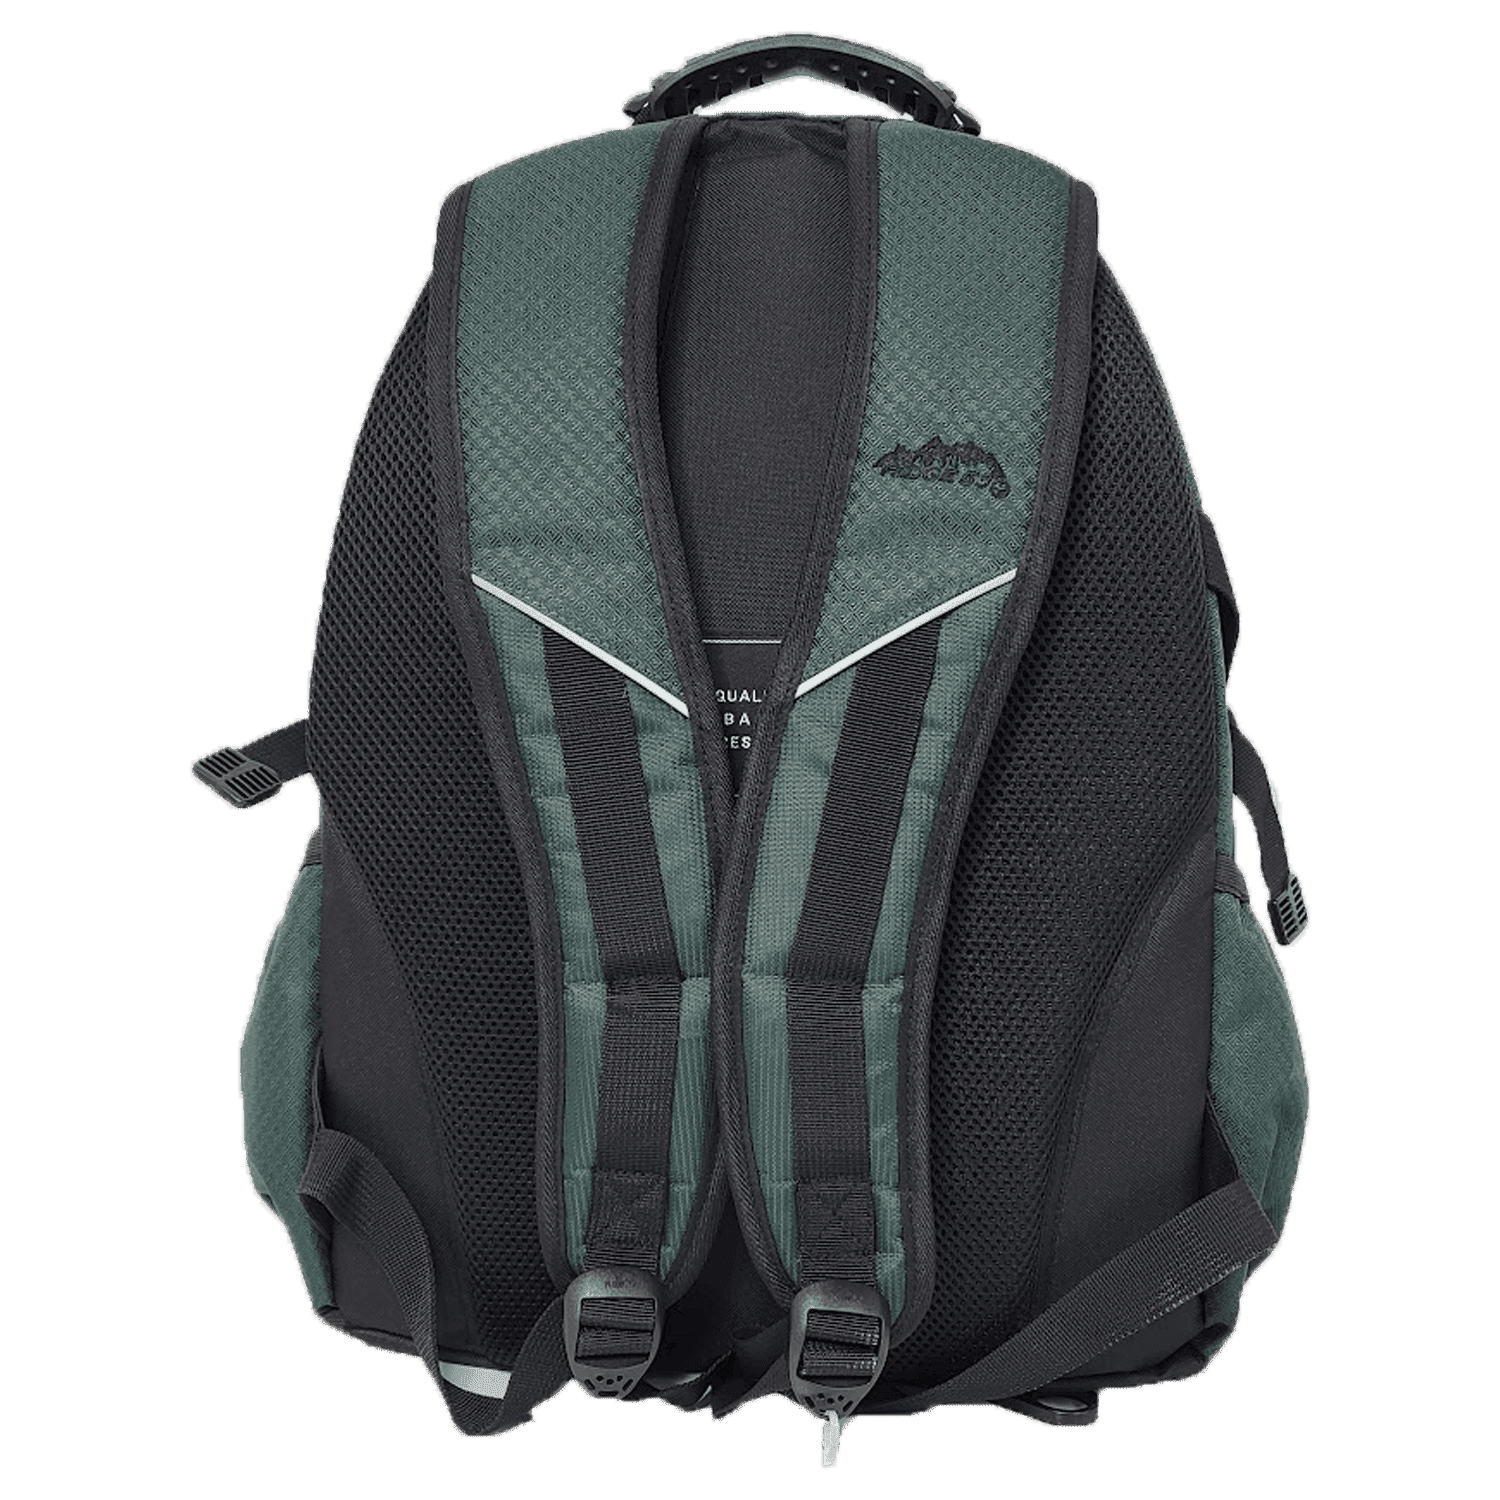 Sportech Ridge 53 – Bolton Backpack - Racing Green 4 Shaws Department Stores